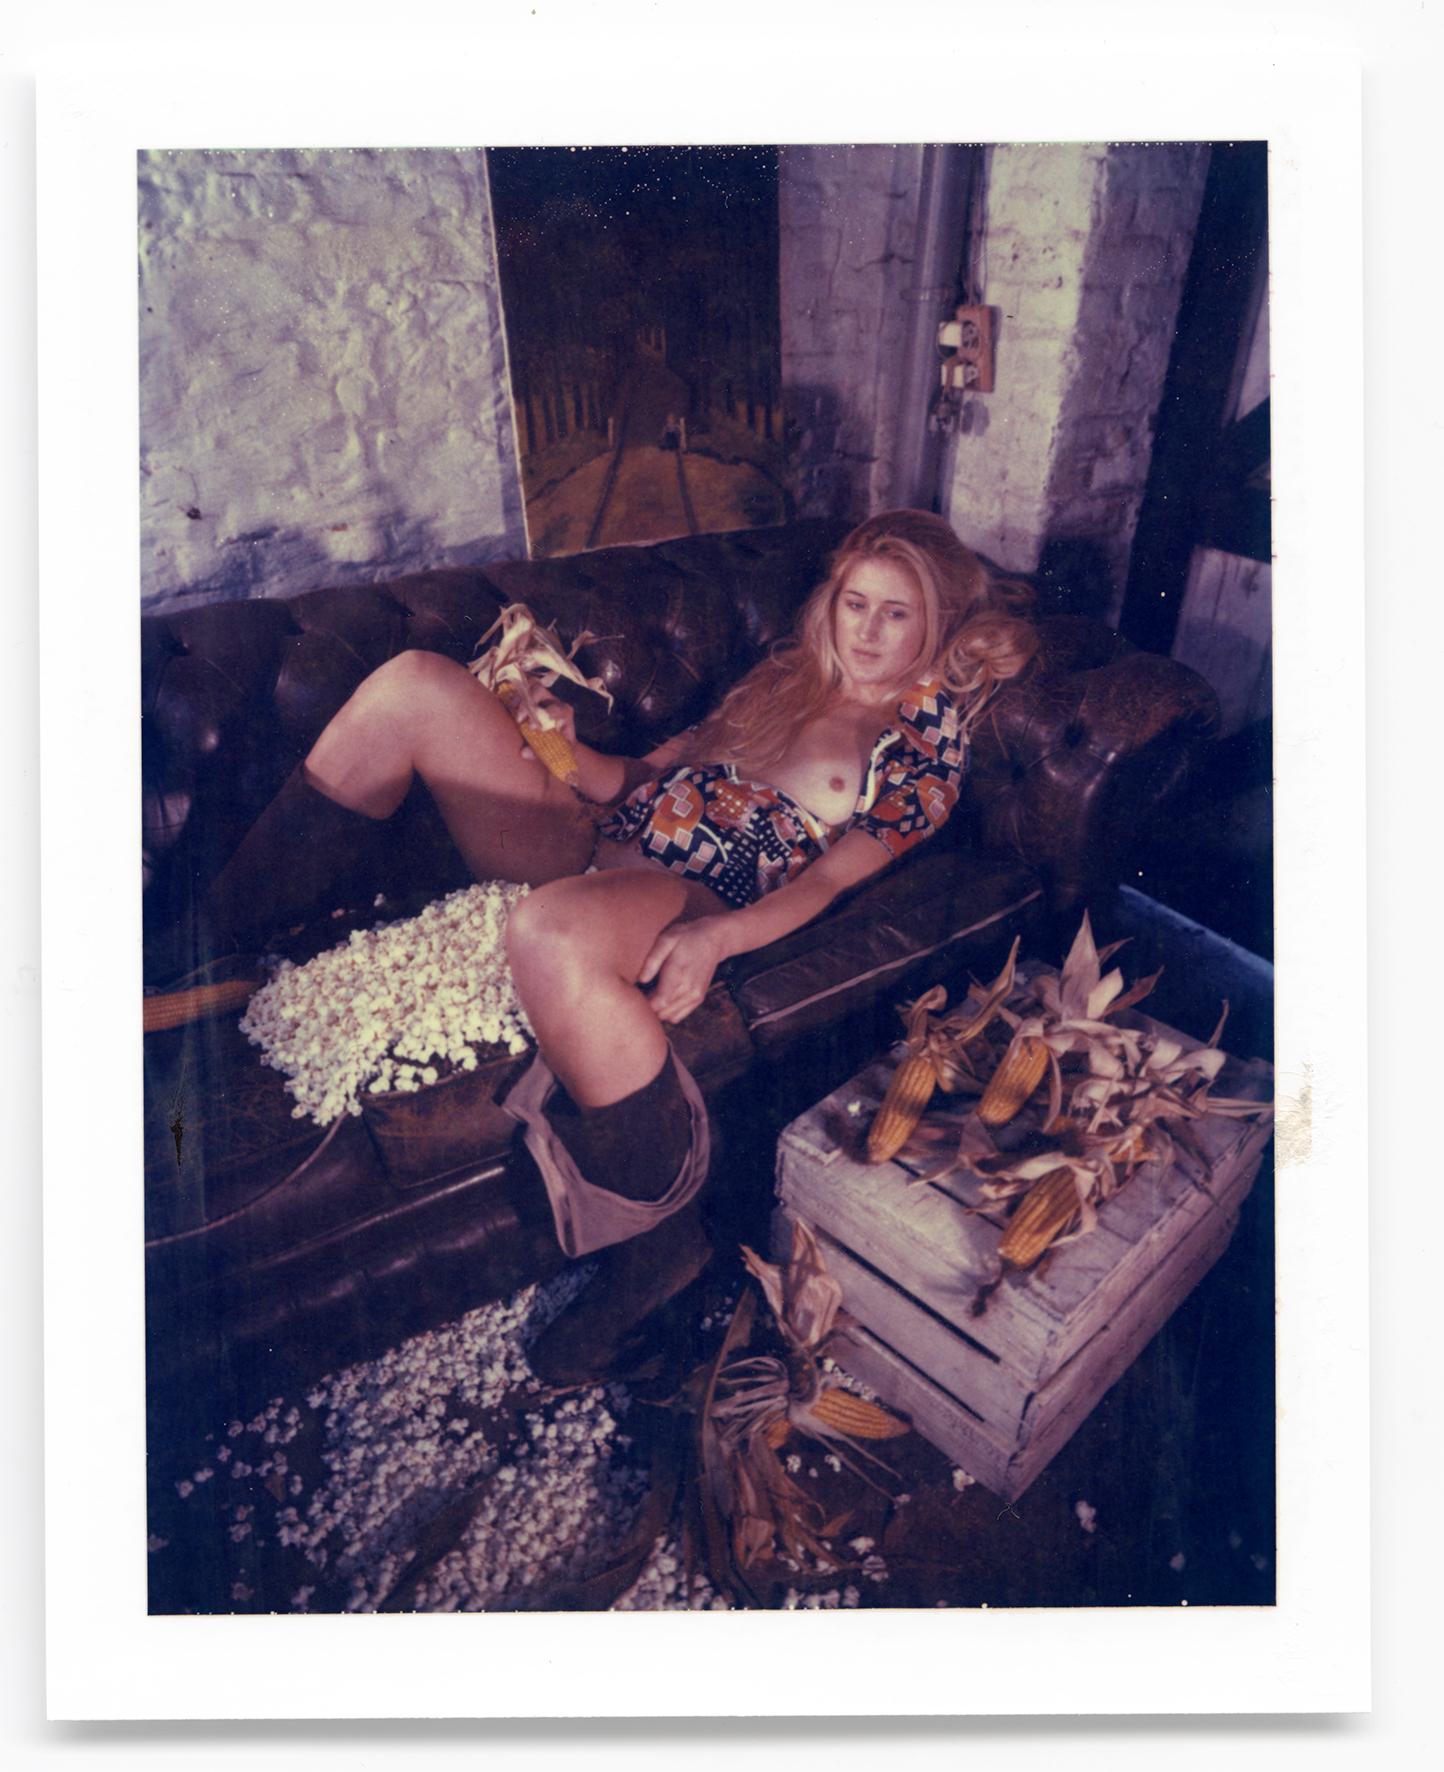 Carmen de Vos Figurative Photograph - Corn Fest - Unique piece - Original Polaroid, Women, Contemporary, Nude